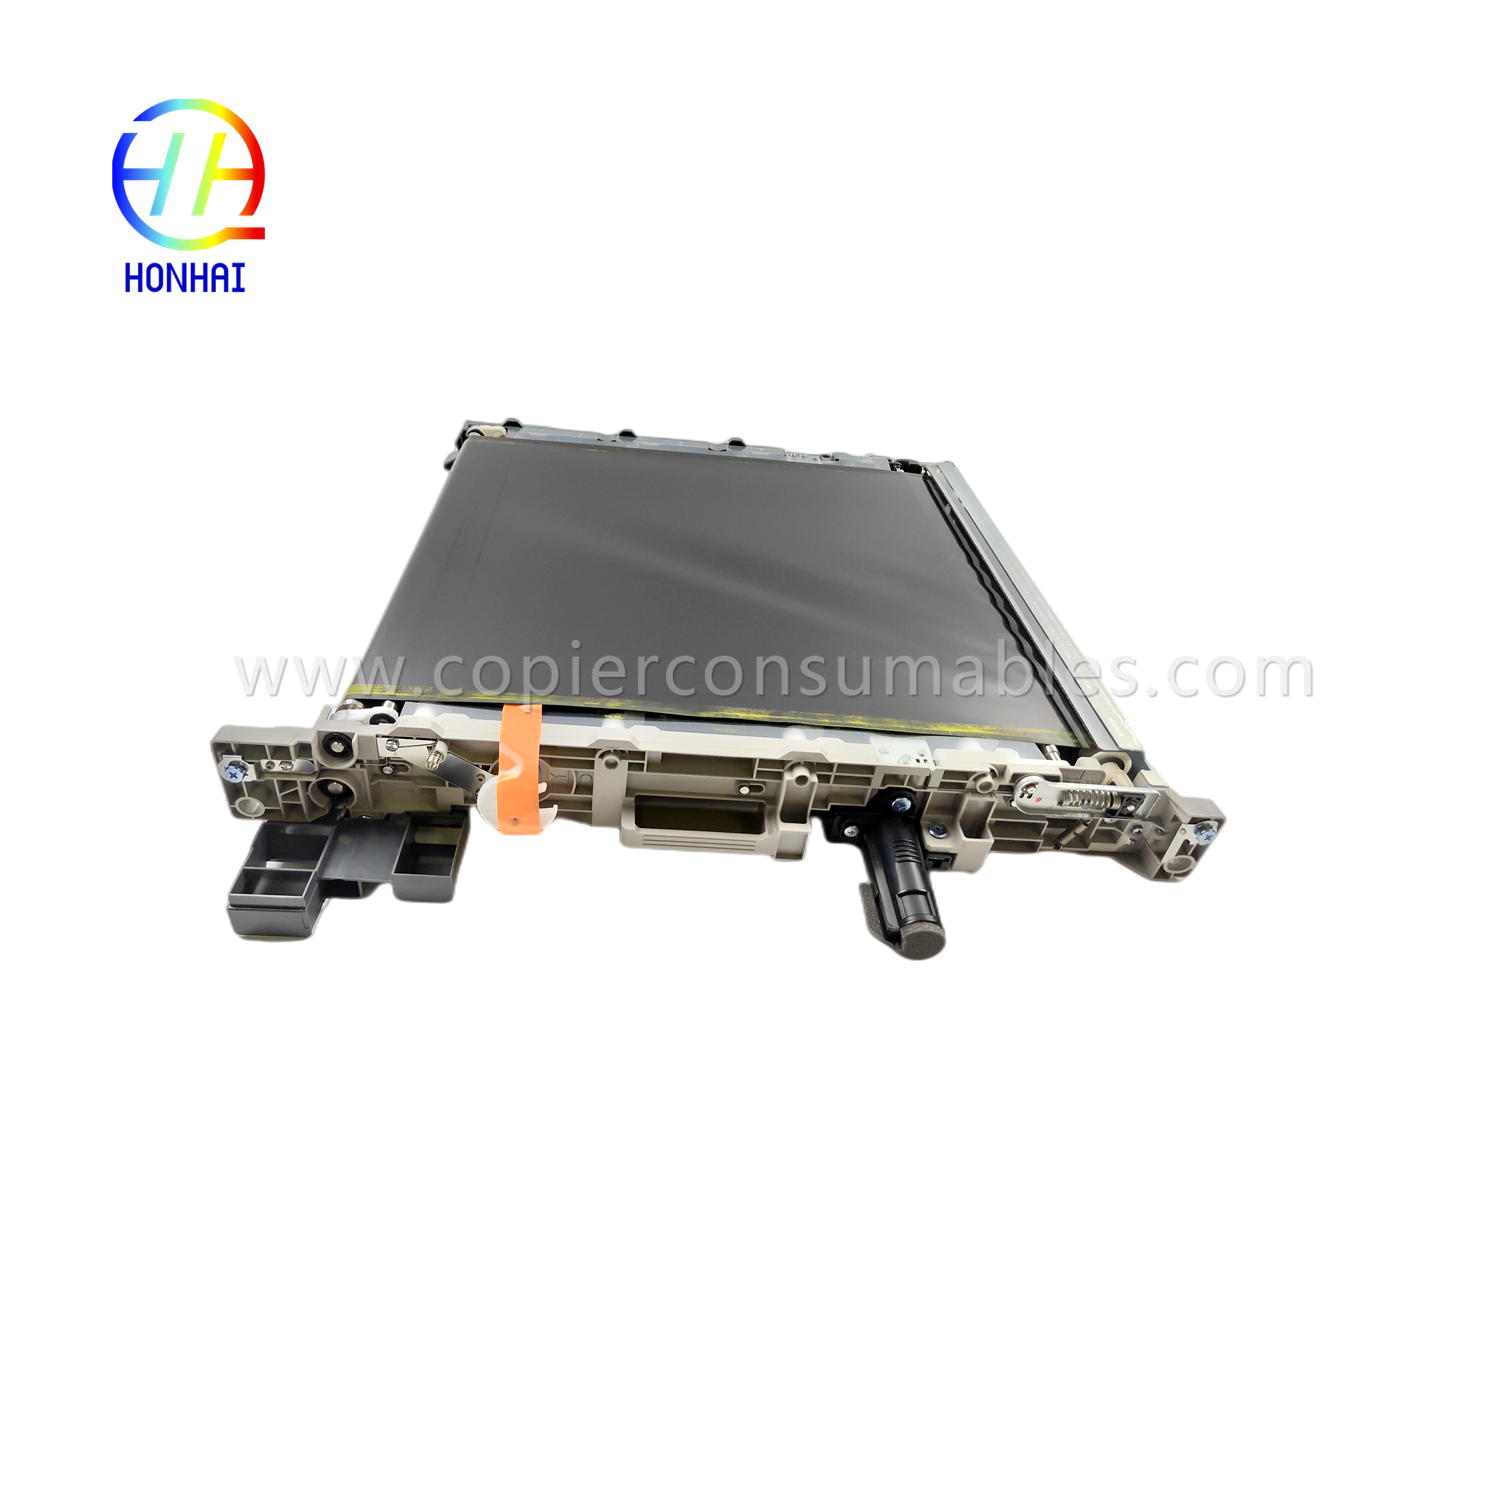 Primary transfer belt unit for Sharp MX -602U1 (3)